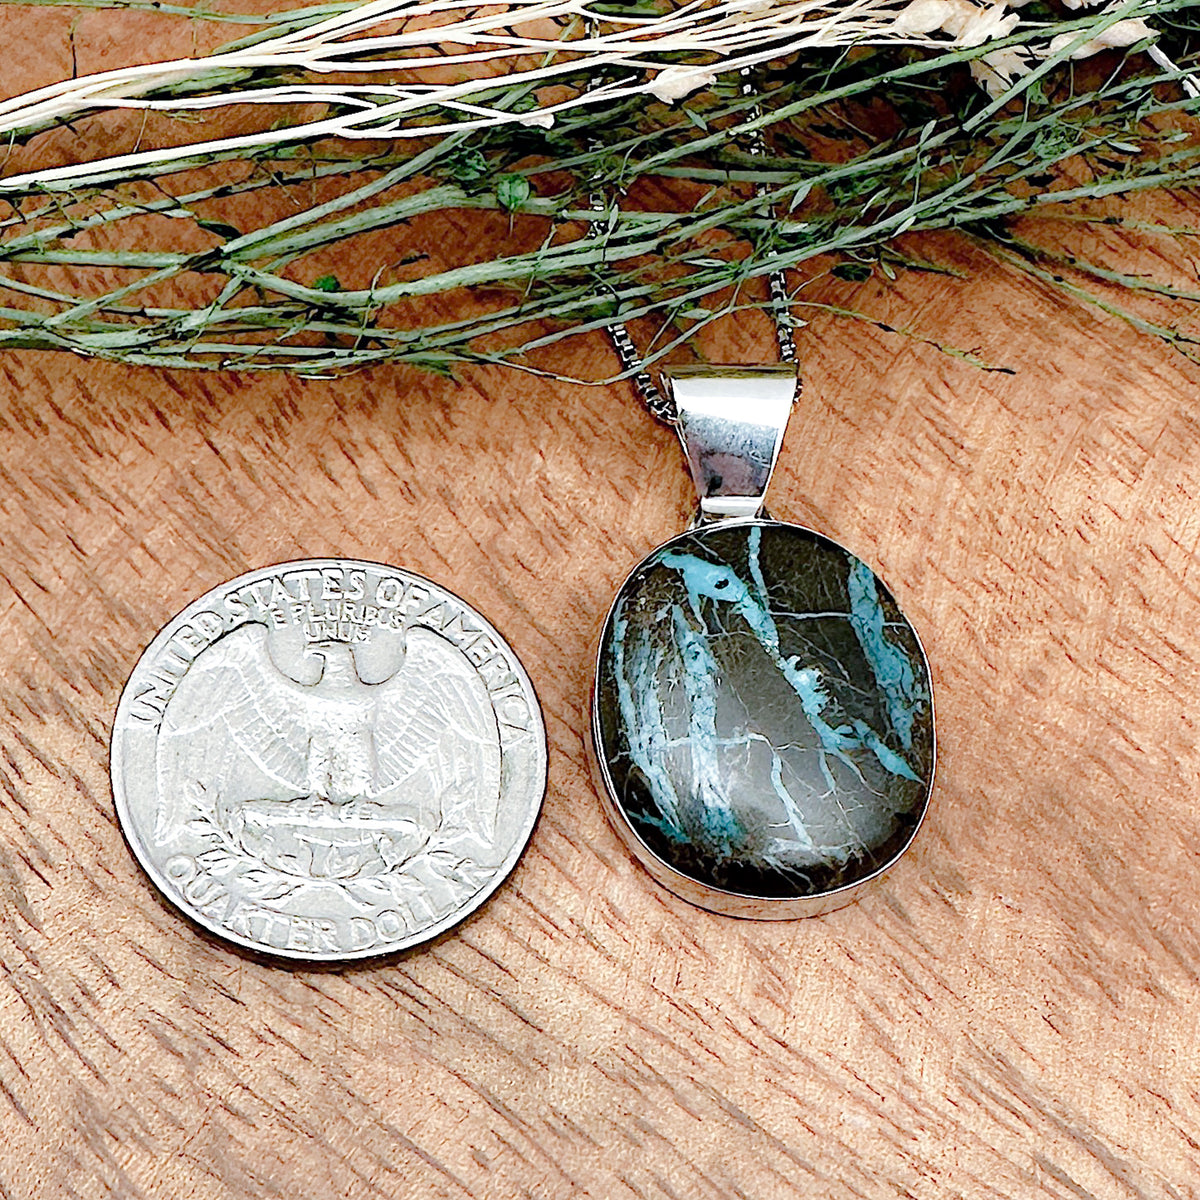 Comparison shot of a US quarter coin and a boulder turquoise pendant